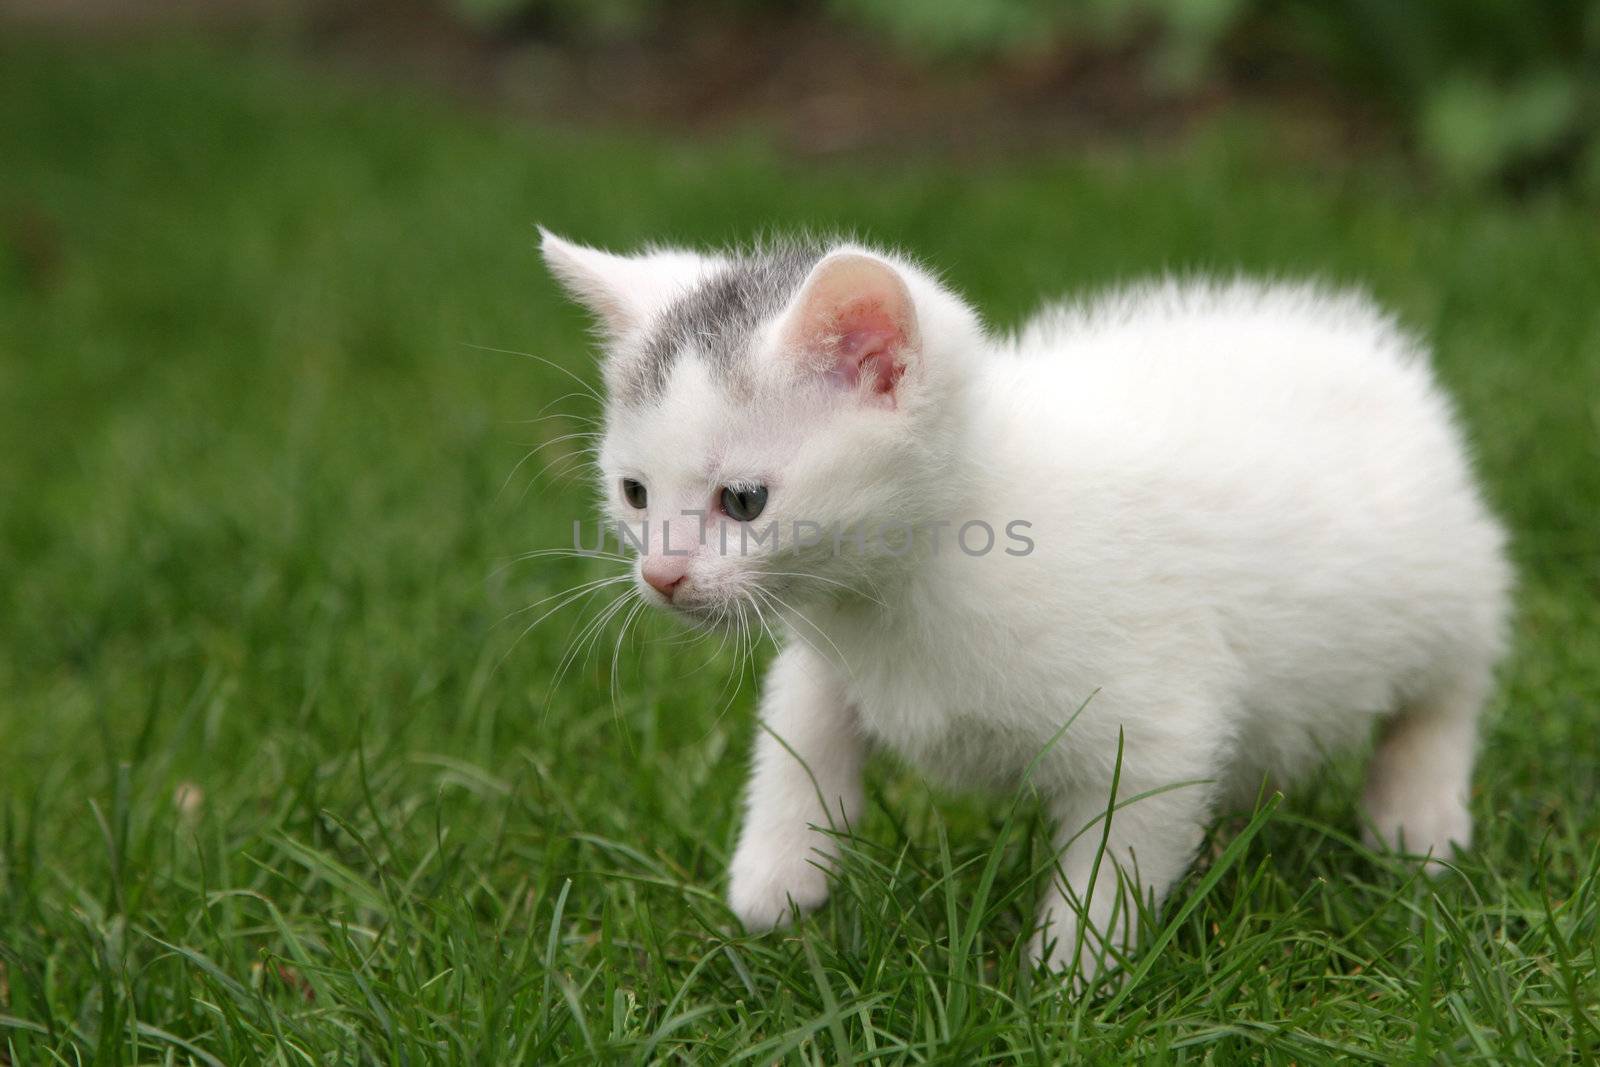 Little white kitten carefully taking her first steps in the big world